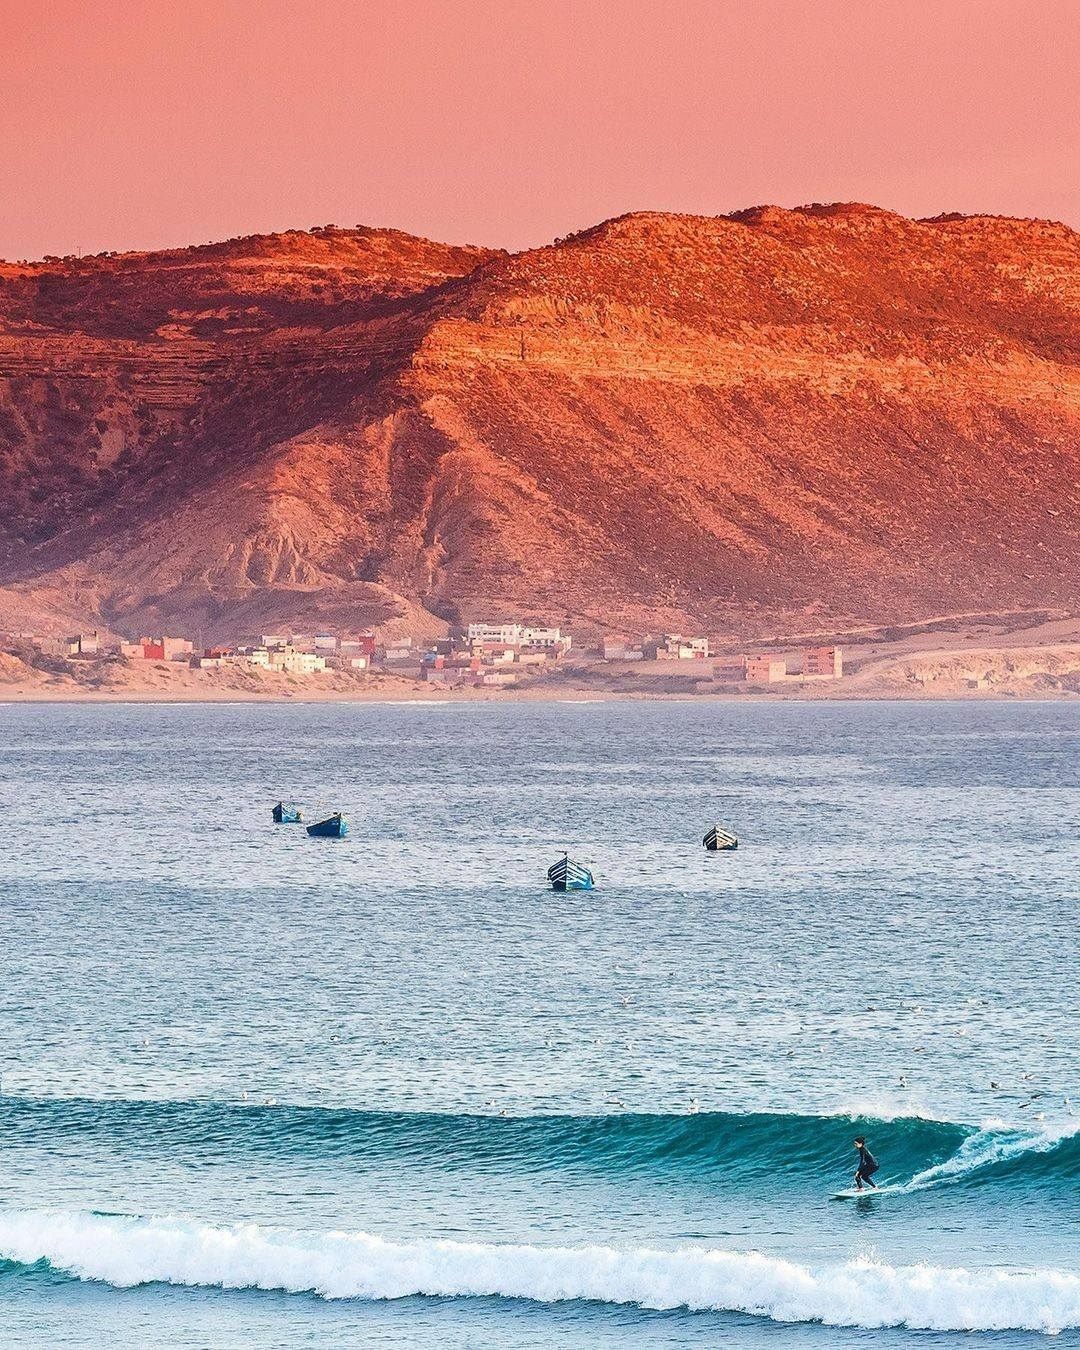 Morocco top 10 beach destinations in Africa